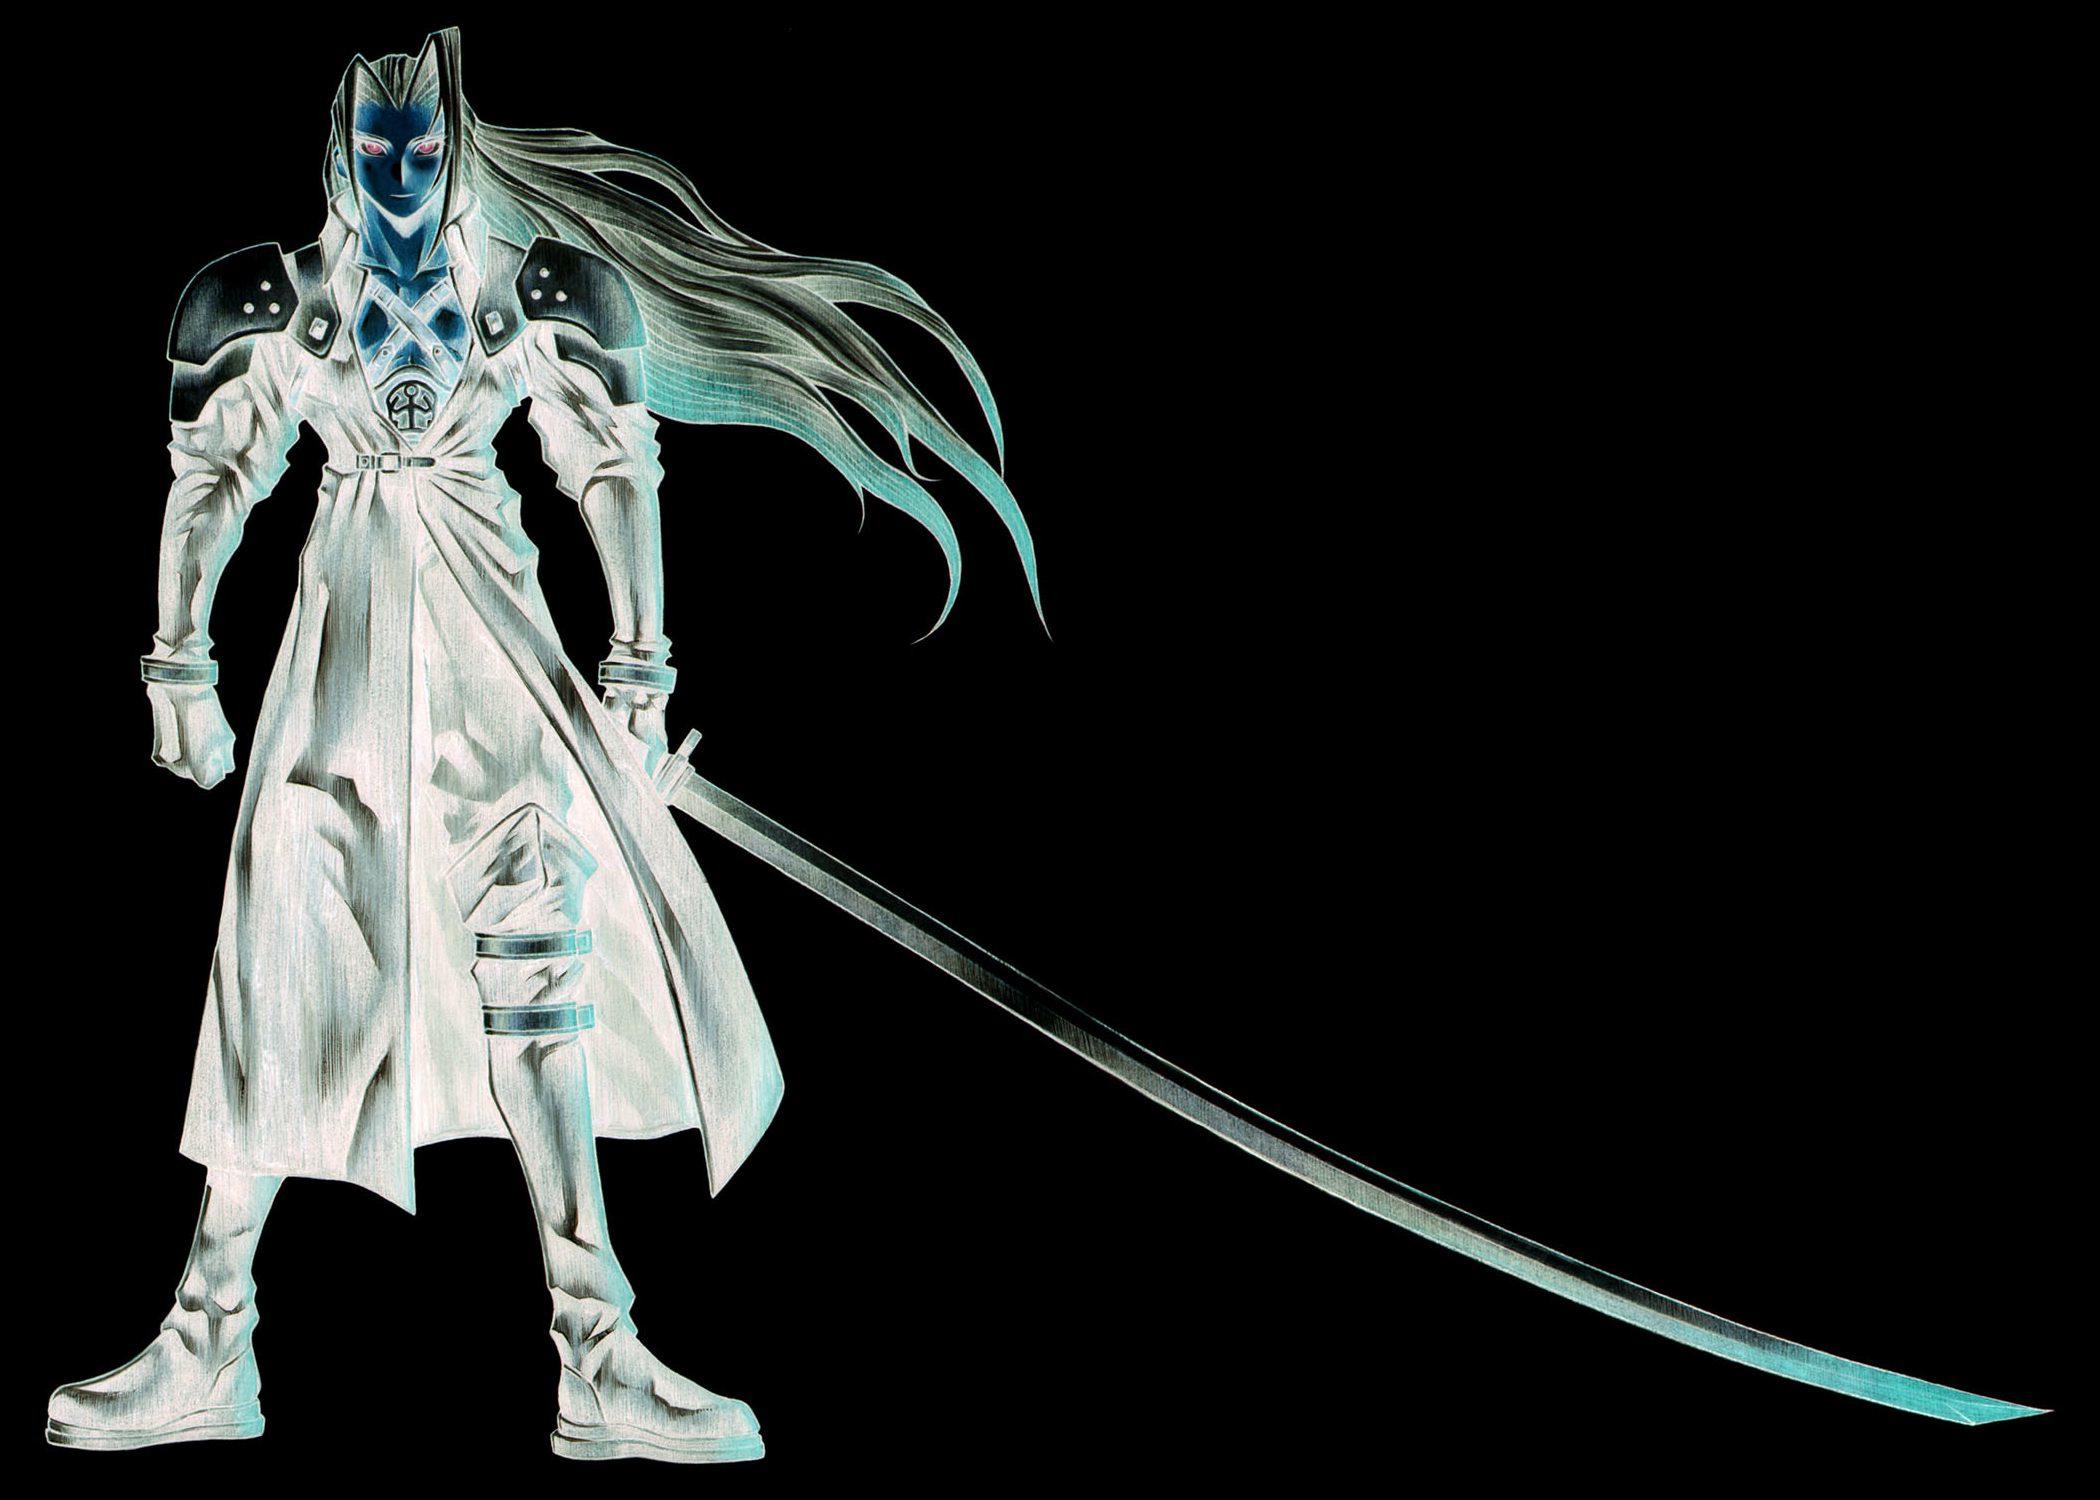 Sephiroth (One Winged Angel)